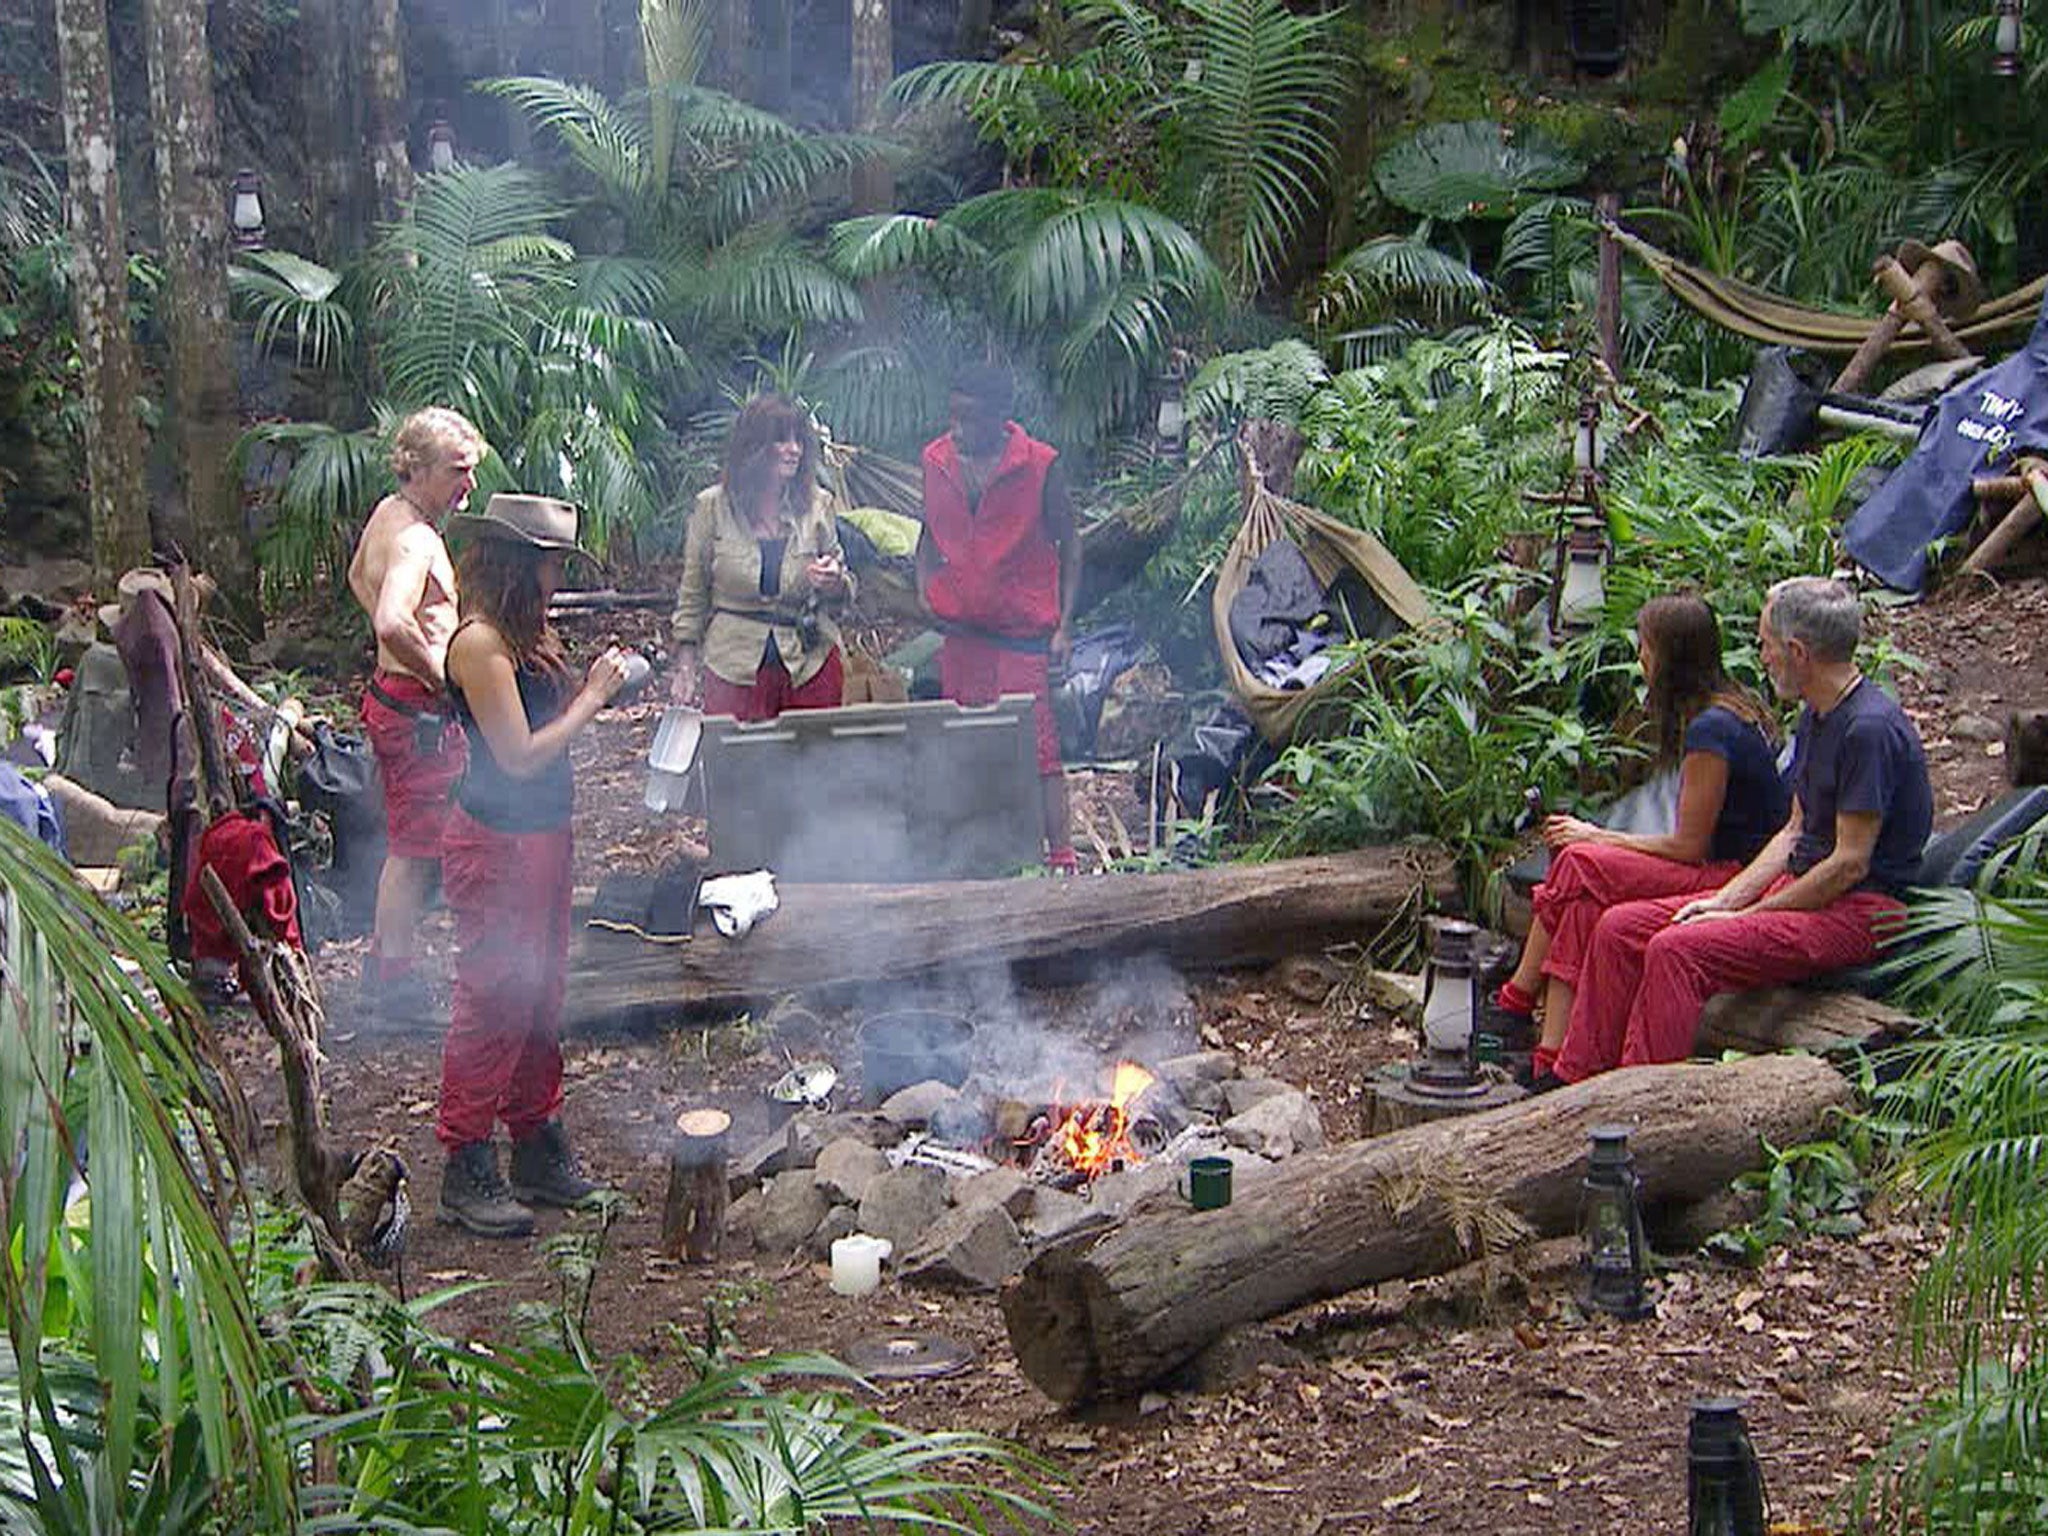 Contestants around the campfire